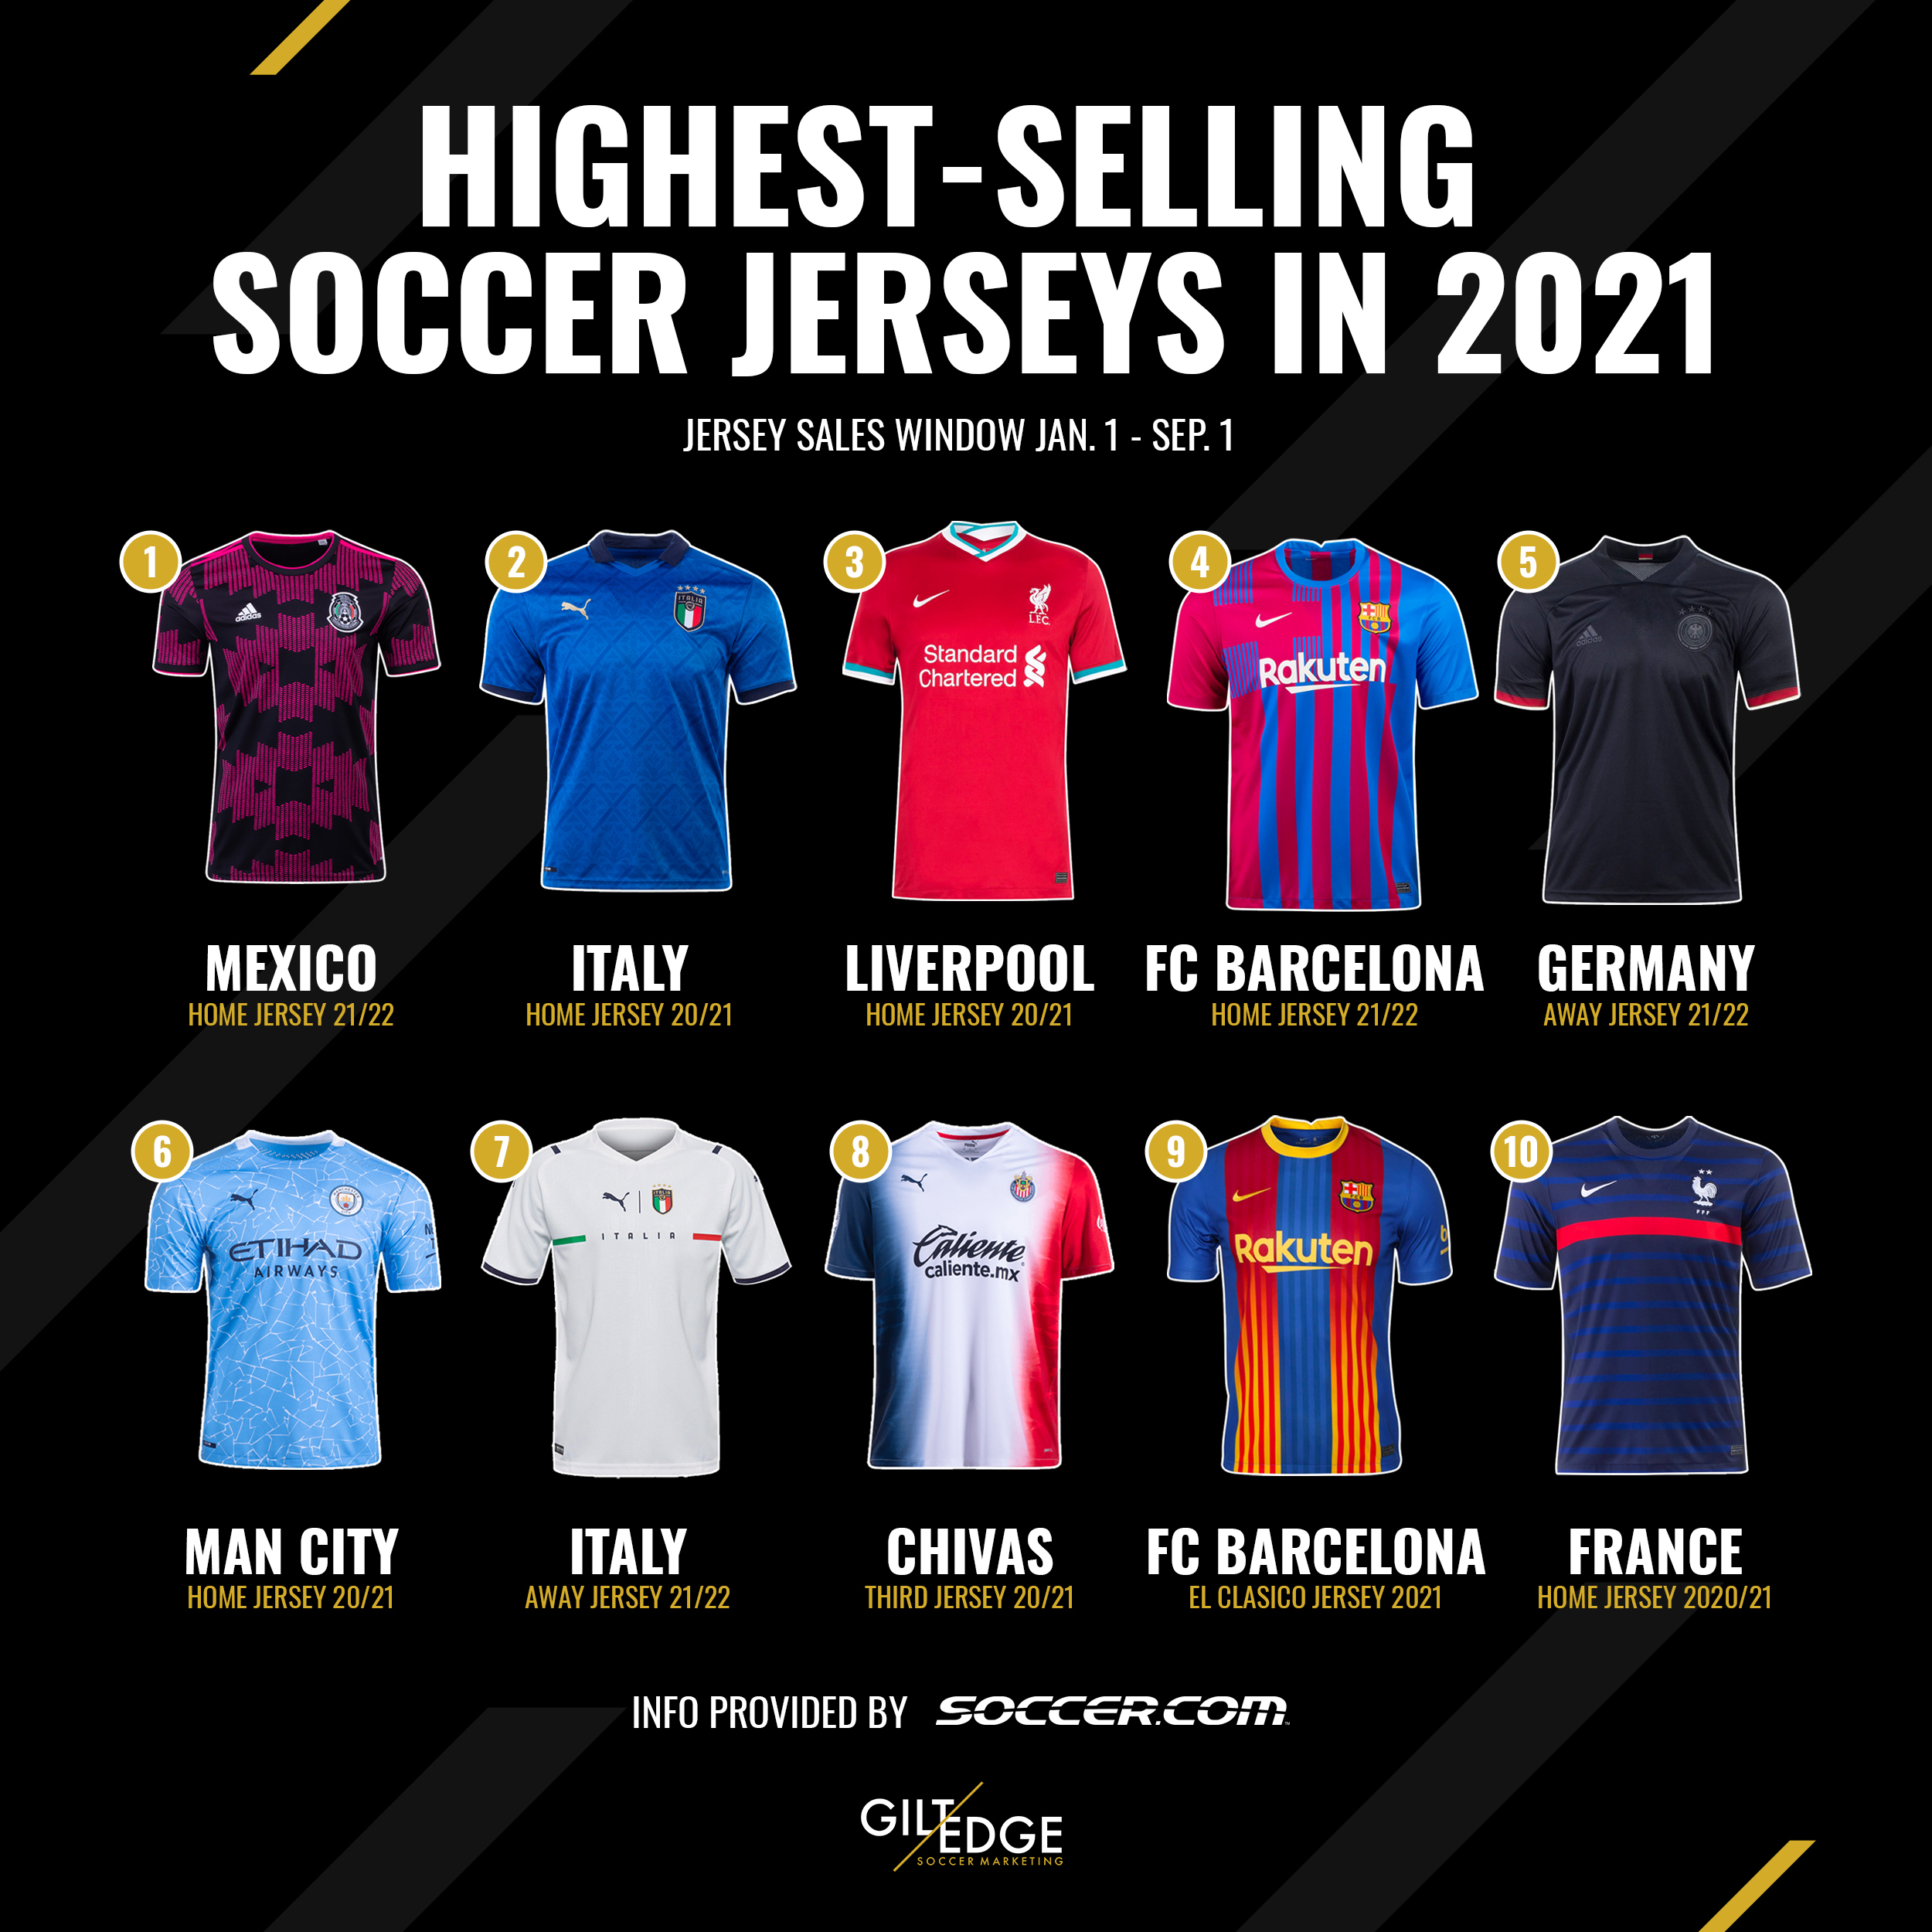 Highest-Selling Soccer Jerseys in 2021